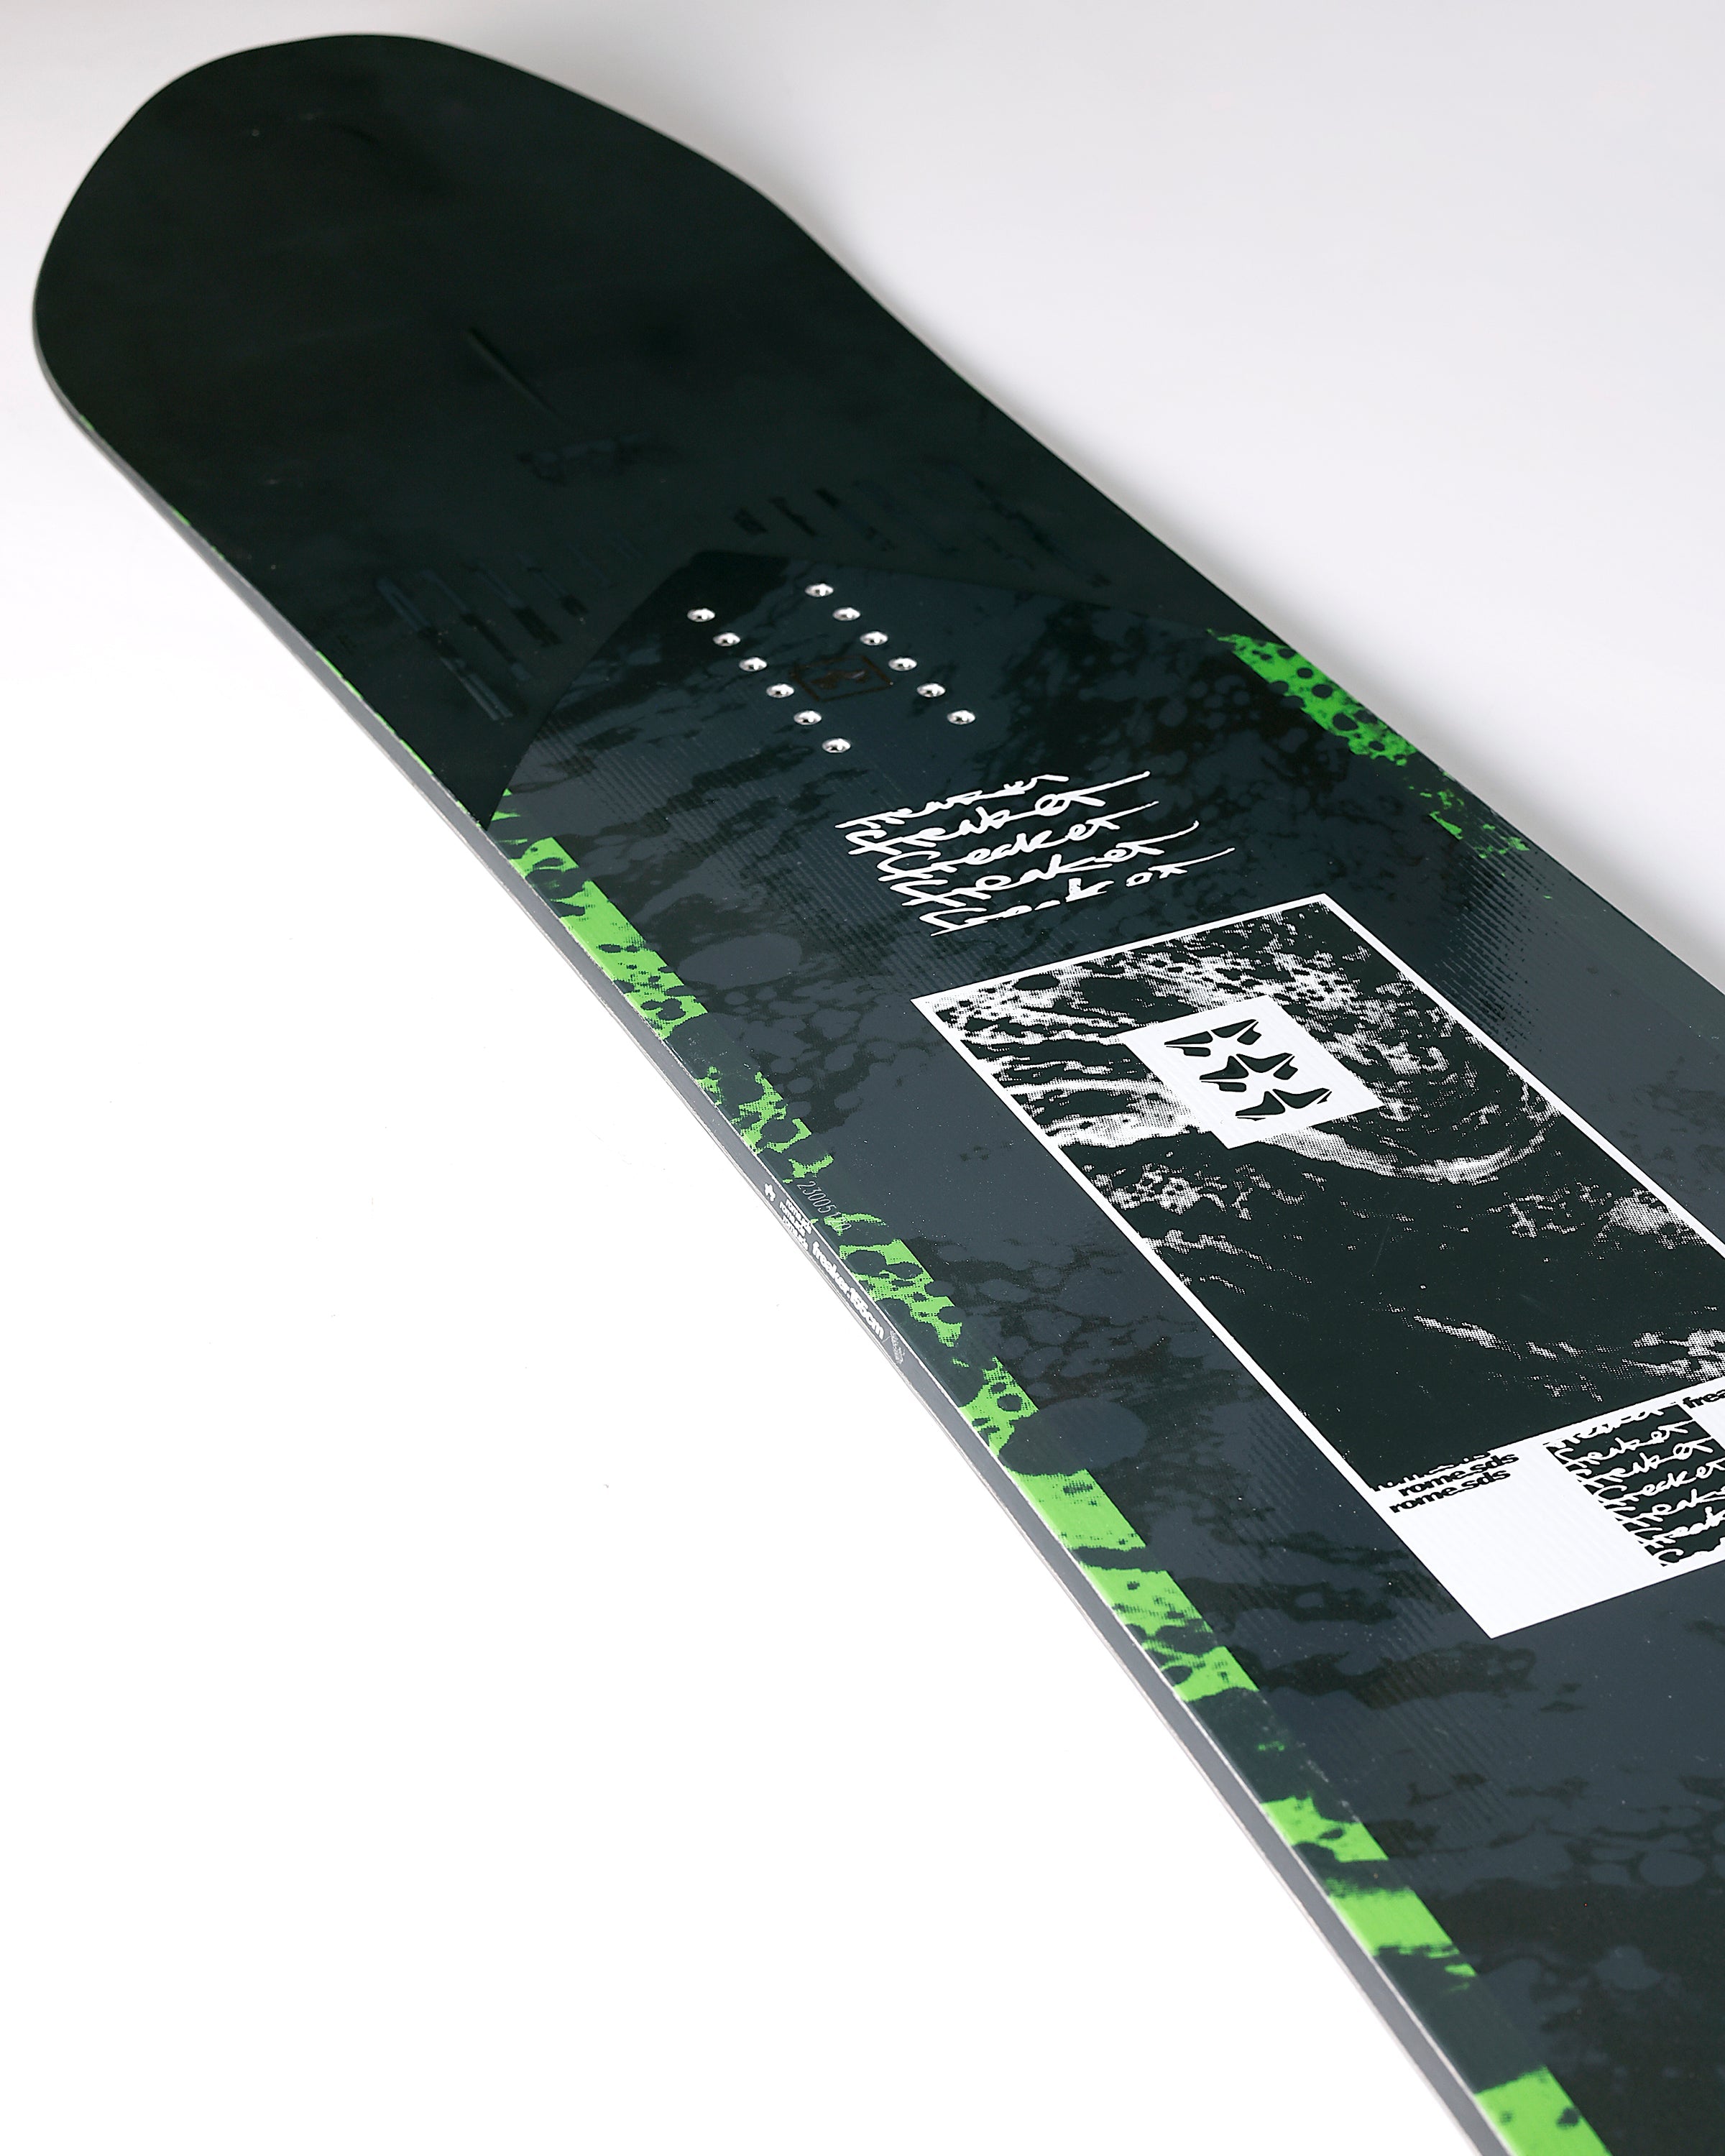 Rome Freaker snowboard 2023 | Rome SDS – Rome SDS US